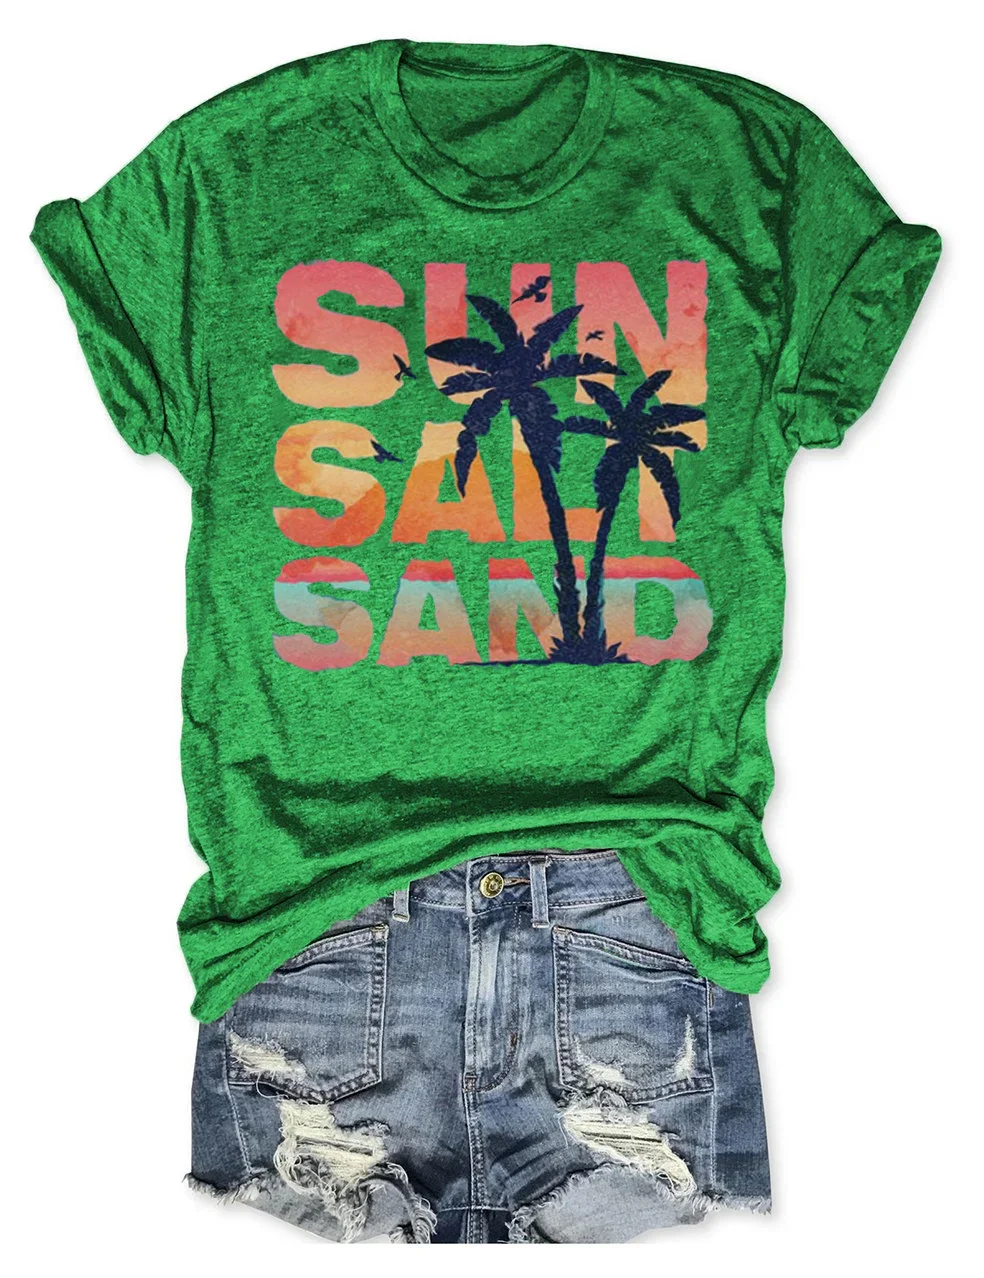 Sun Salt Sand T-shirt